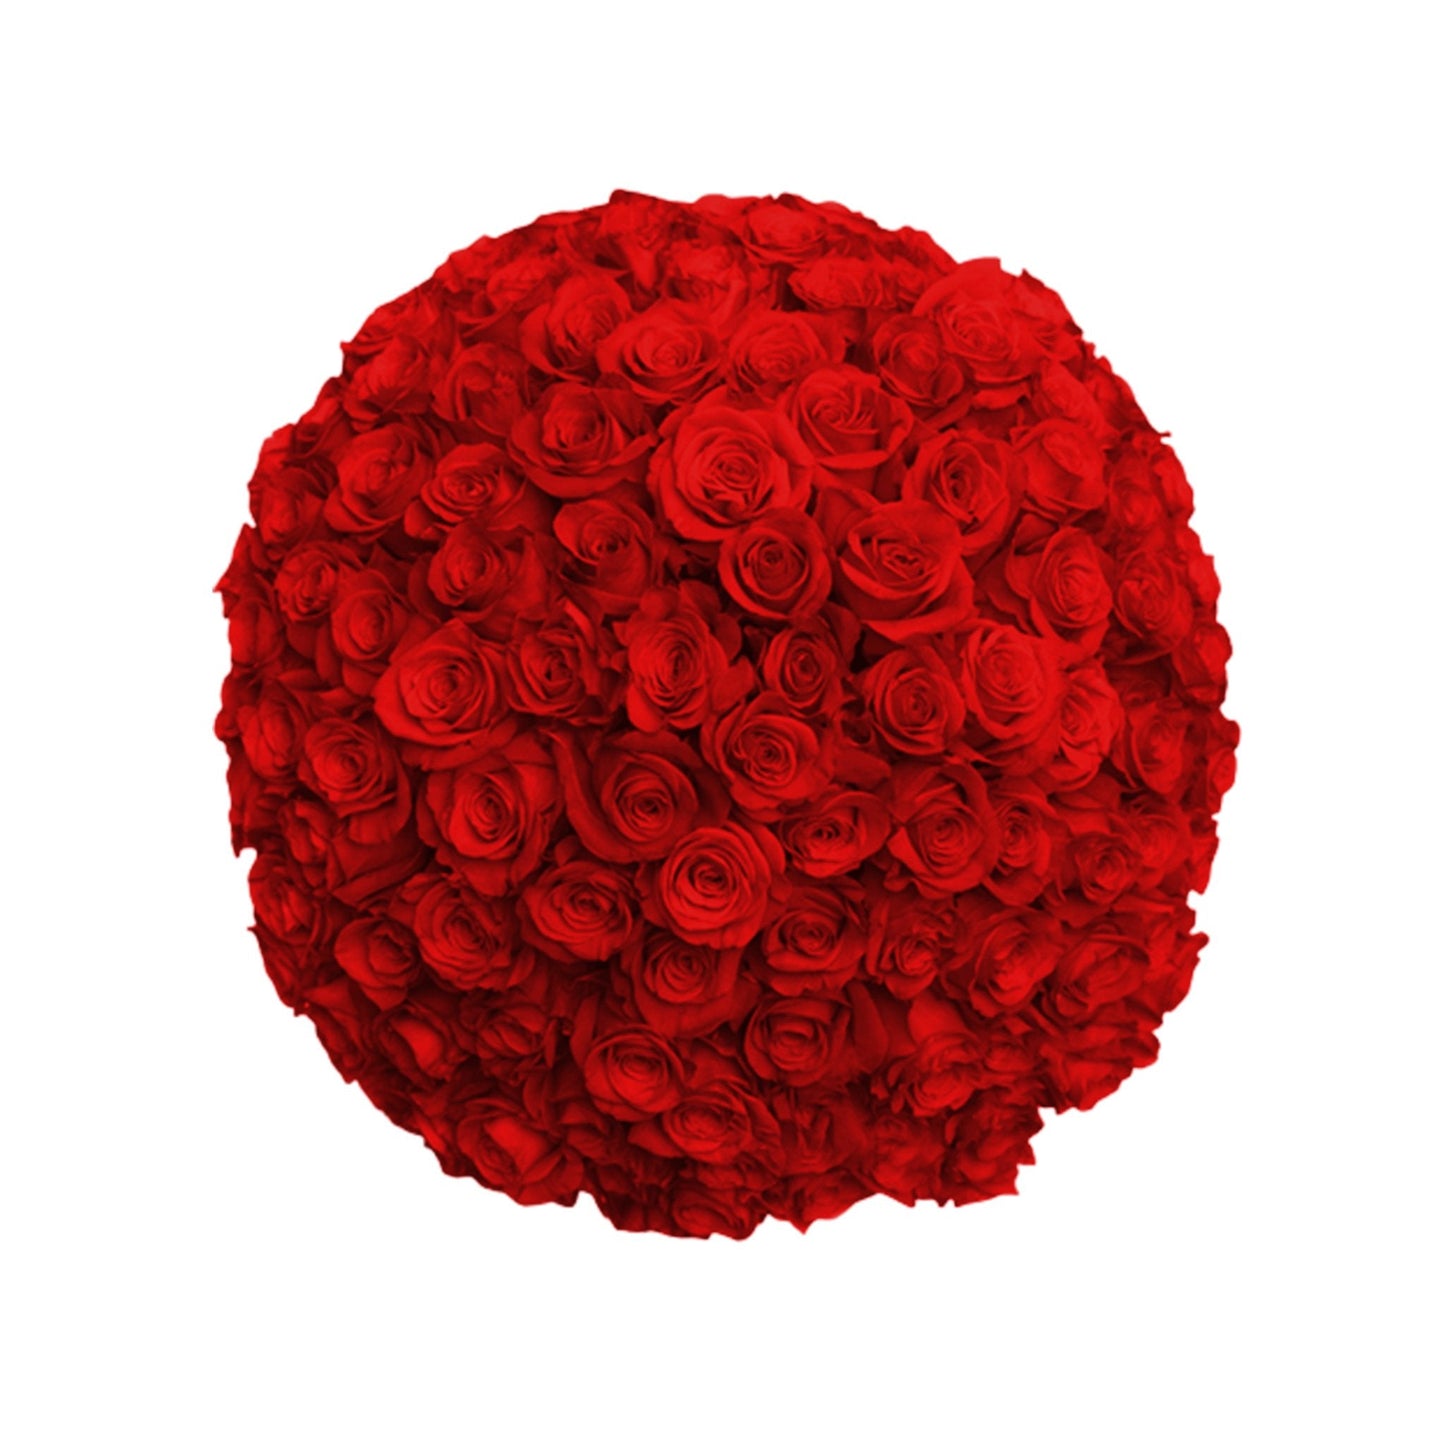 Fresh Roses in a Vase | 100 Red Roses - Floral_Arrangement - Flower Delivery NYC